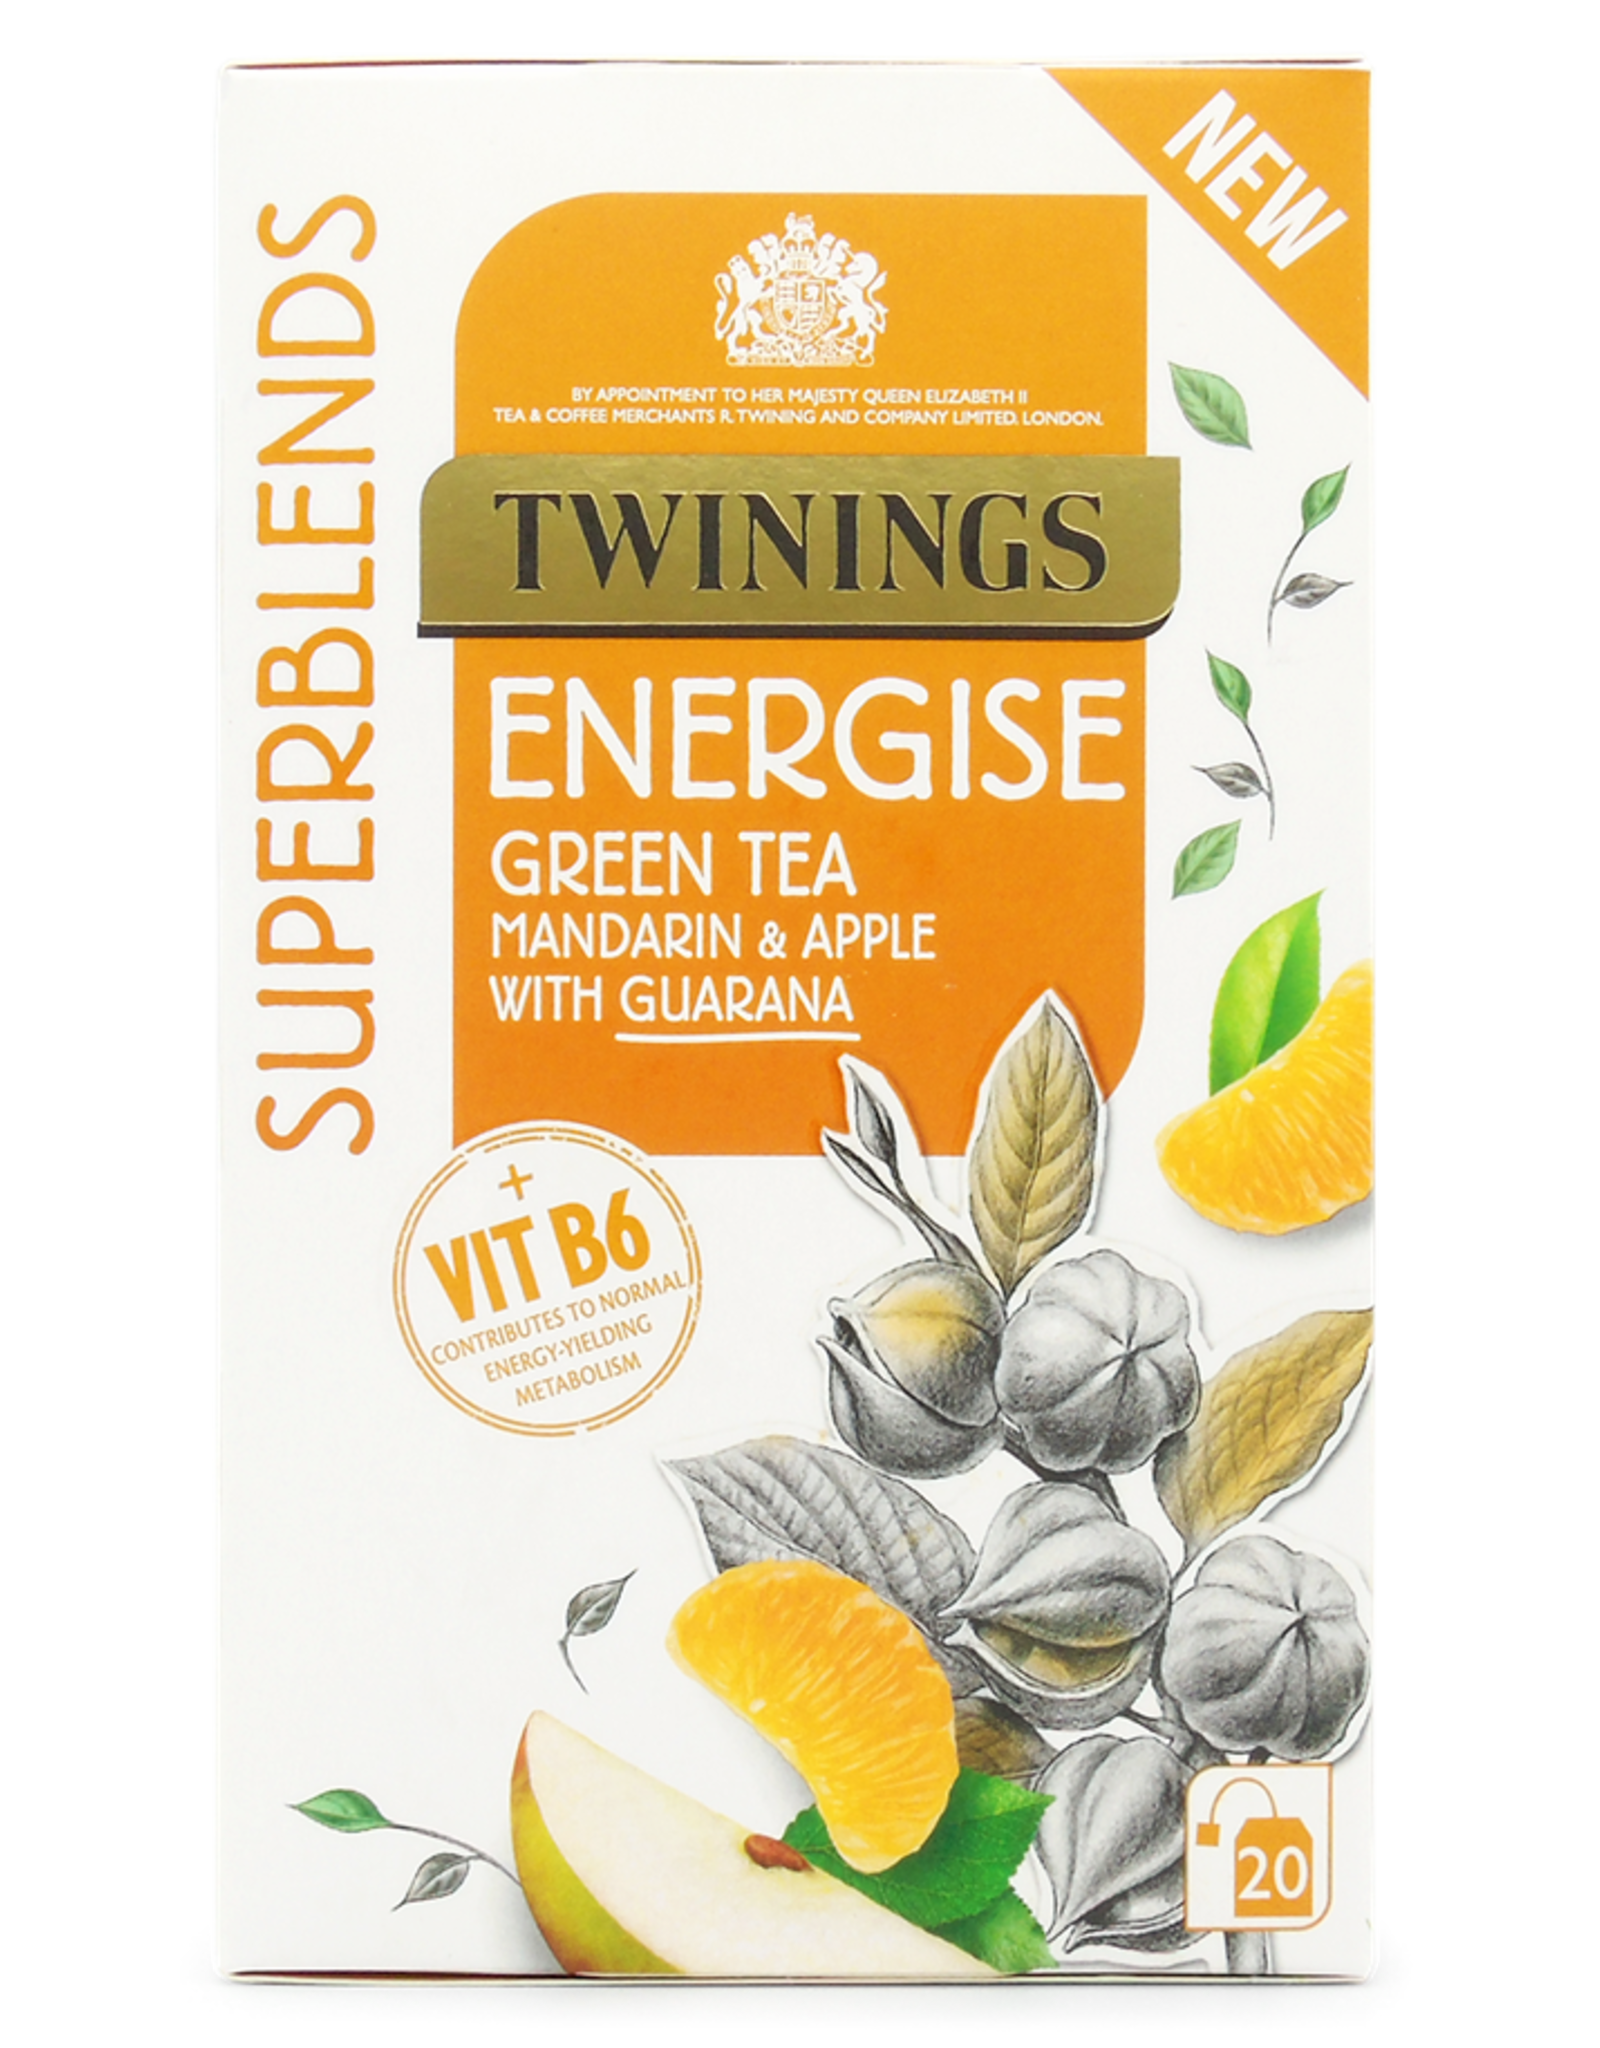 Twinings Twinings Energise Green Tea Mandarin & Apple with Guarana 20's